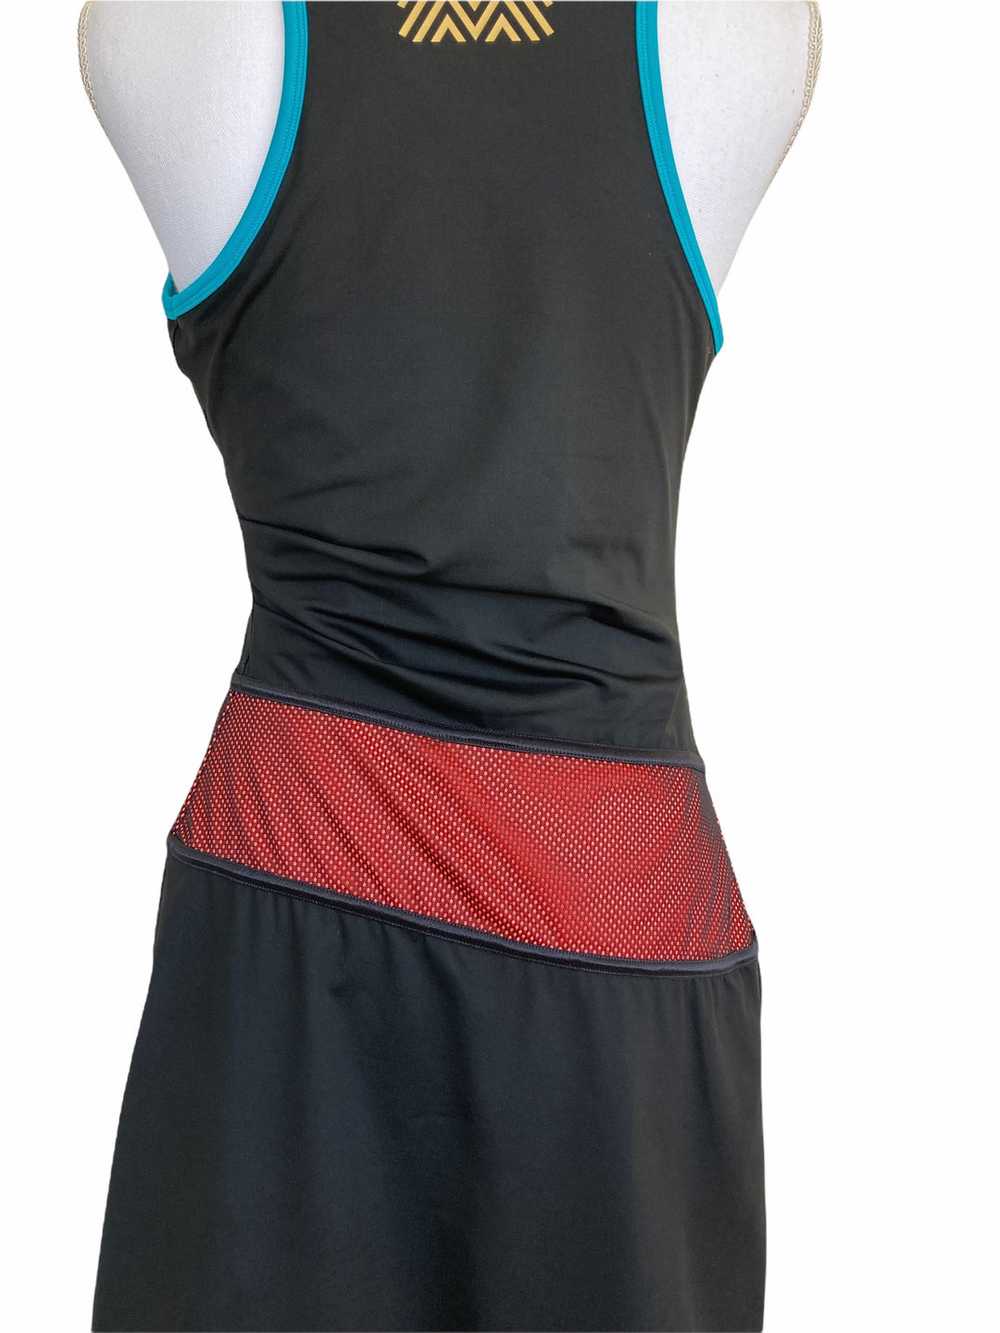 Monreal Tennis Dress L - image 5